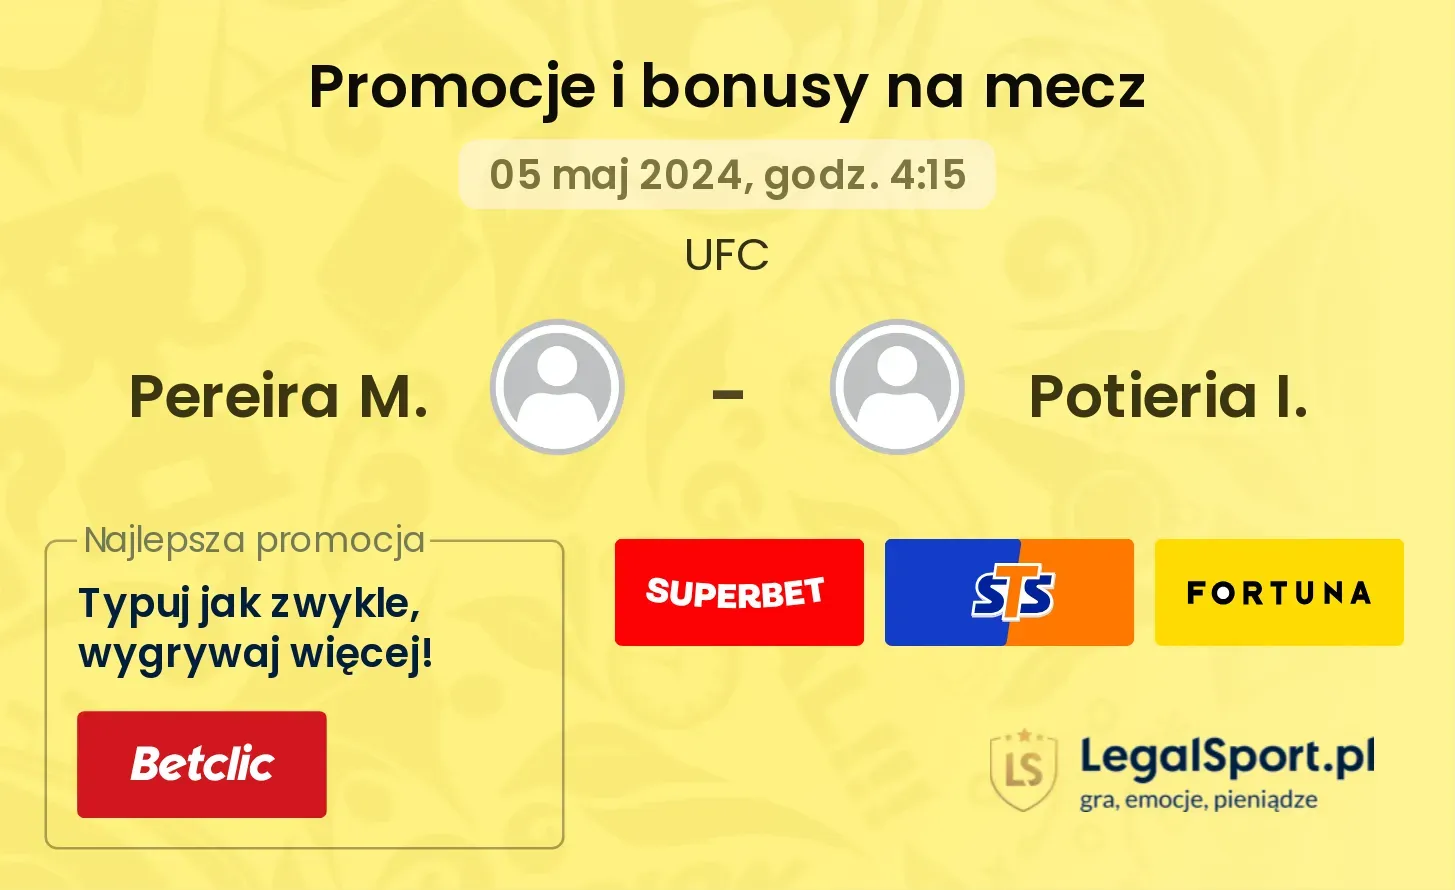 Pereira M. - Potieria I. promocje bonusy na mecz